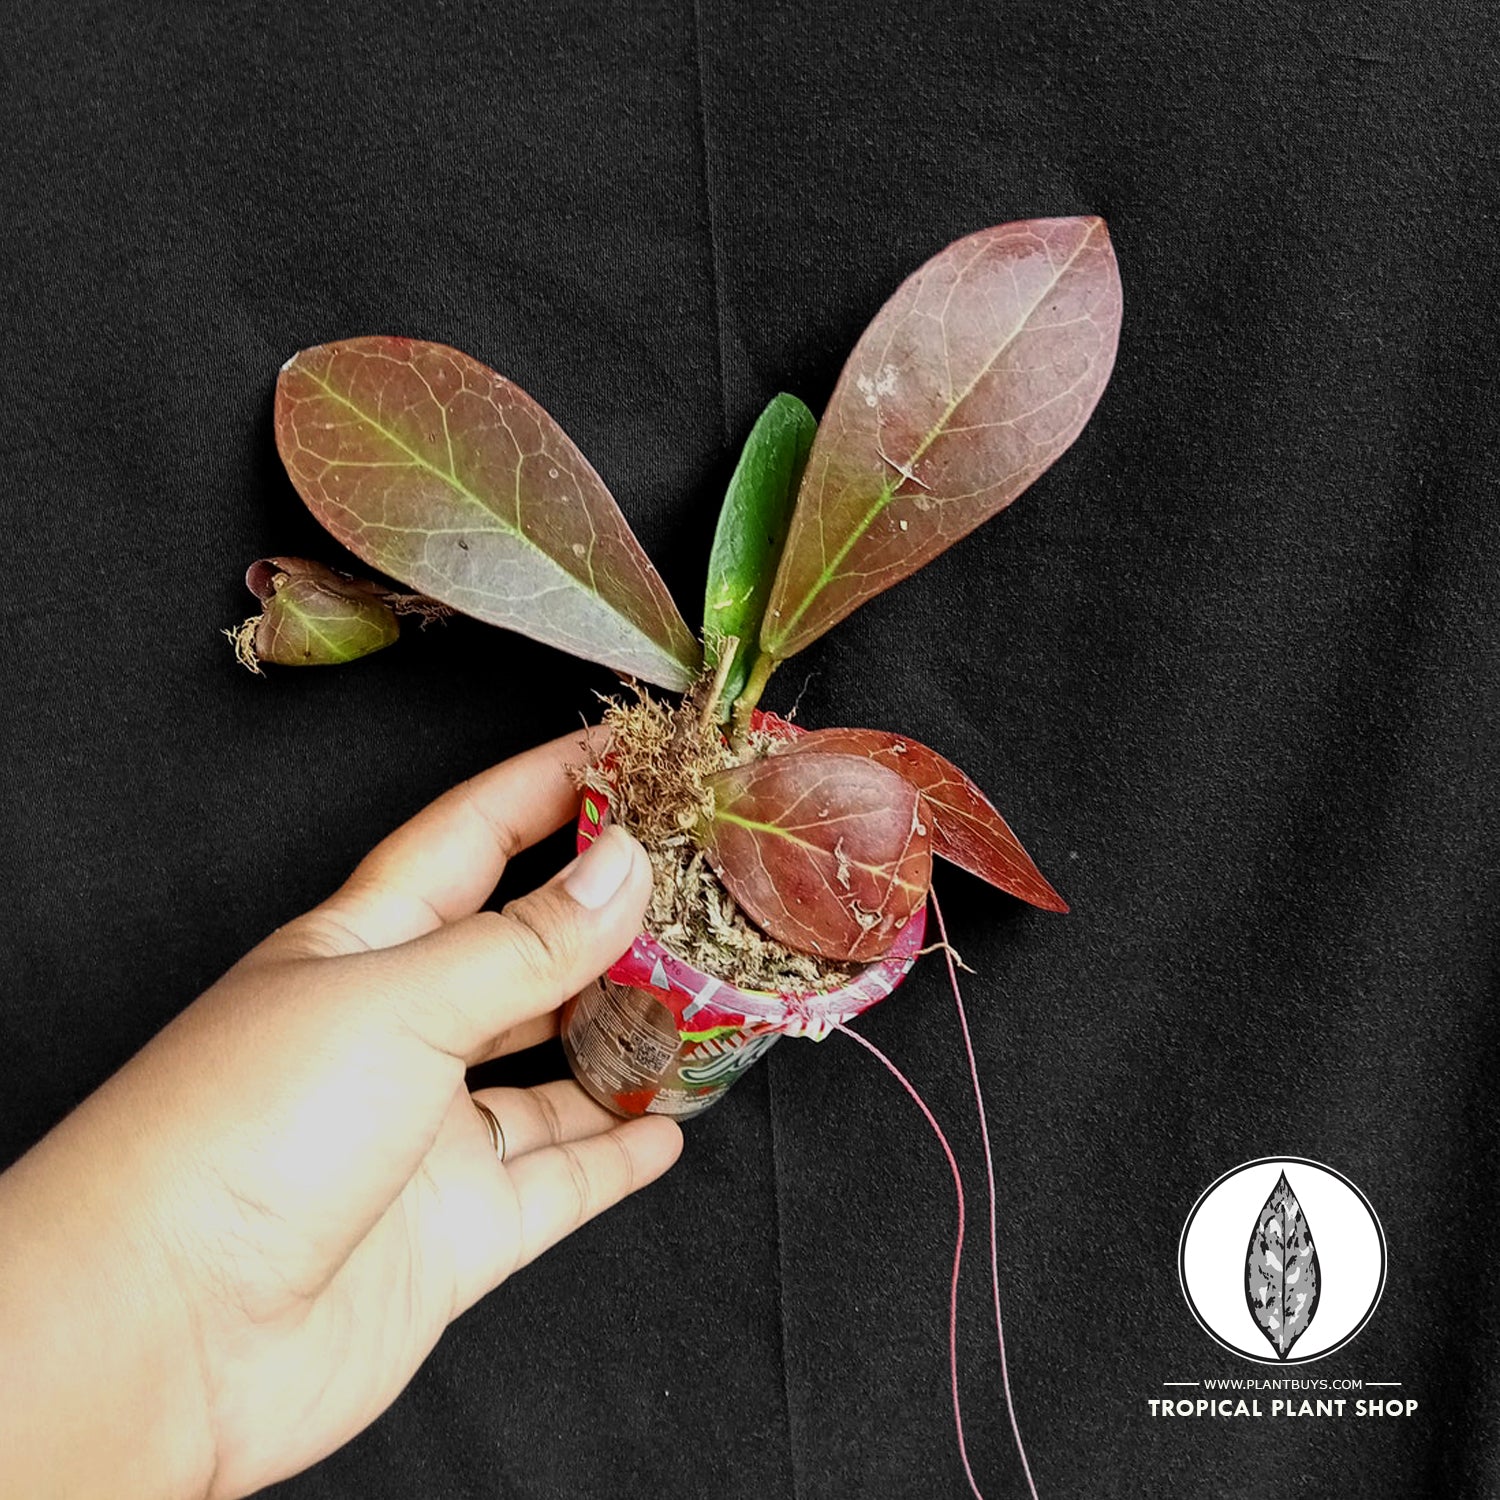 a person hand holding Hoya Buntokensis Sp Borneo plants in plastik pots contains moss planting media